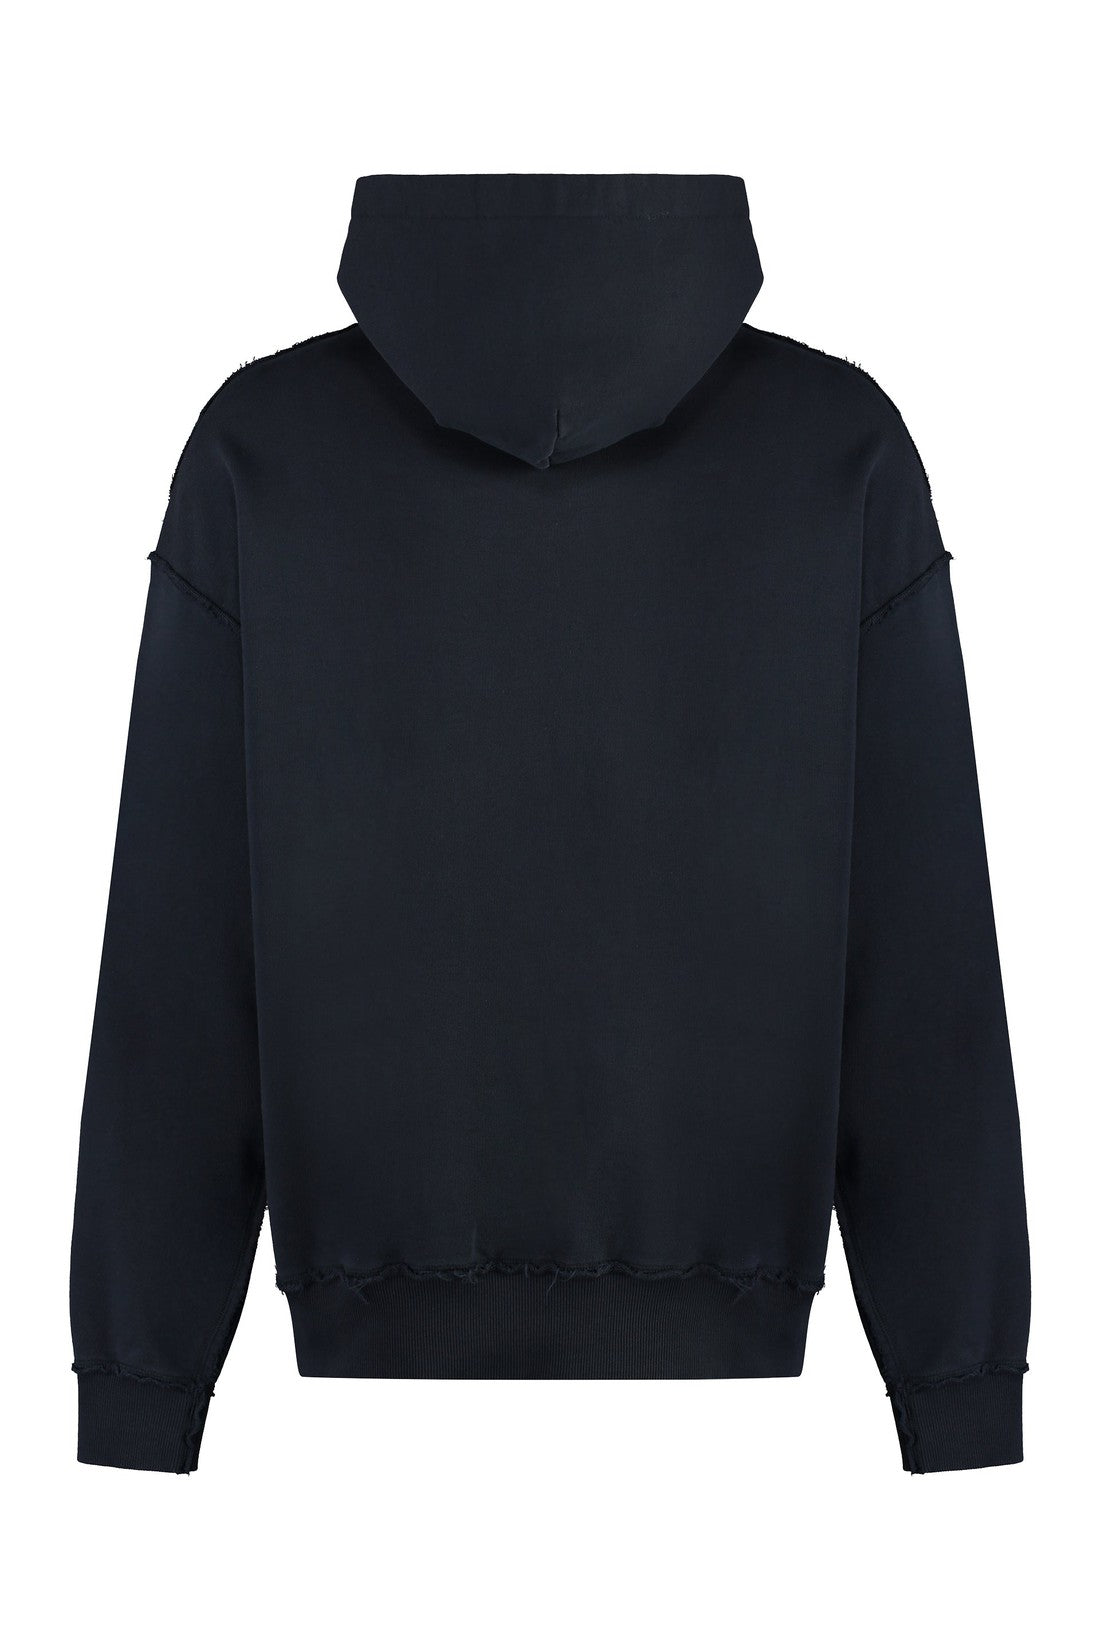 Dolce & Gabbana-OUTLET-SALE-Cotton hoodie-ARCHIVIST